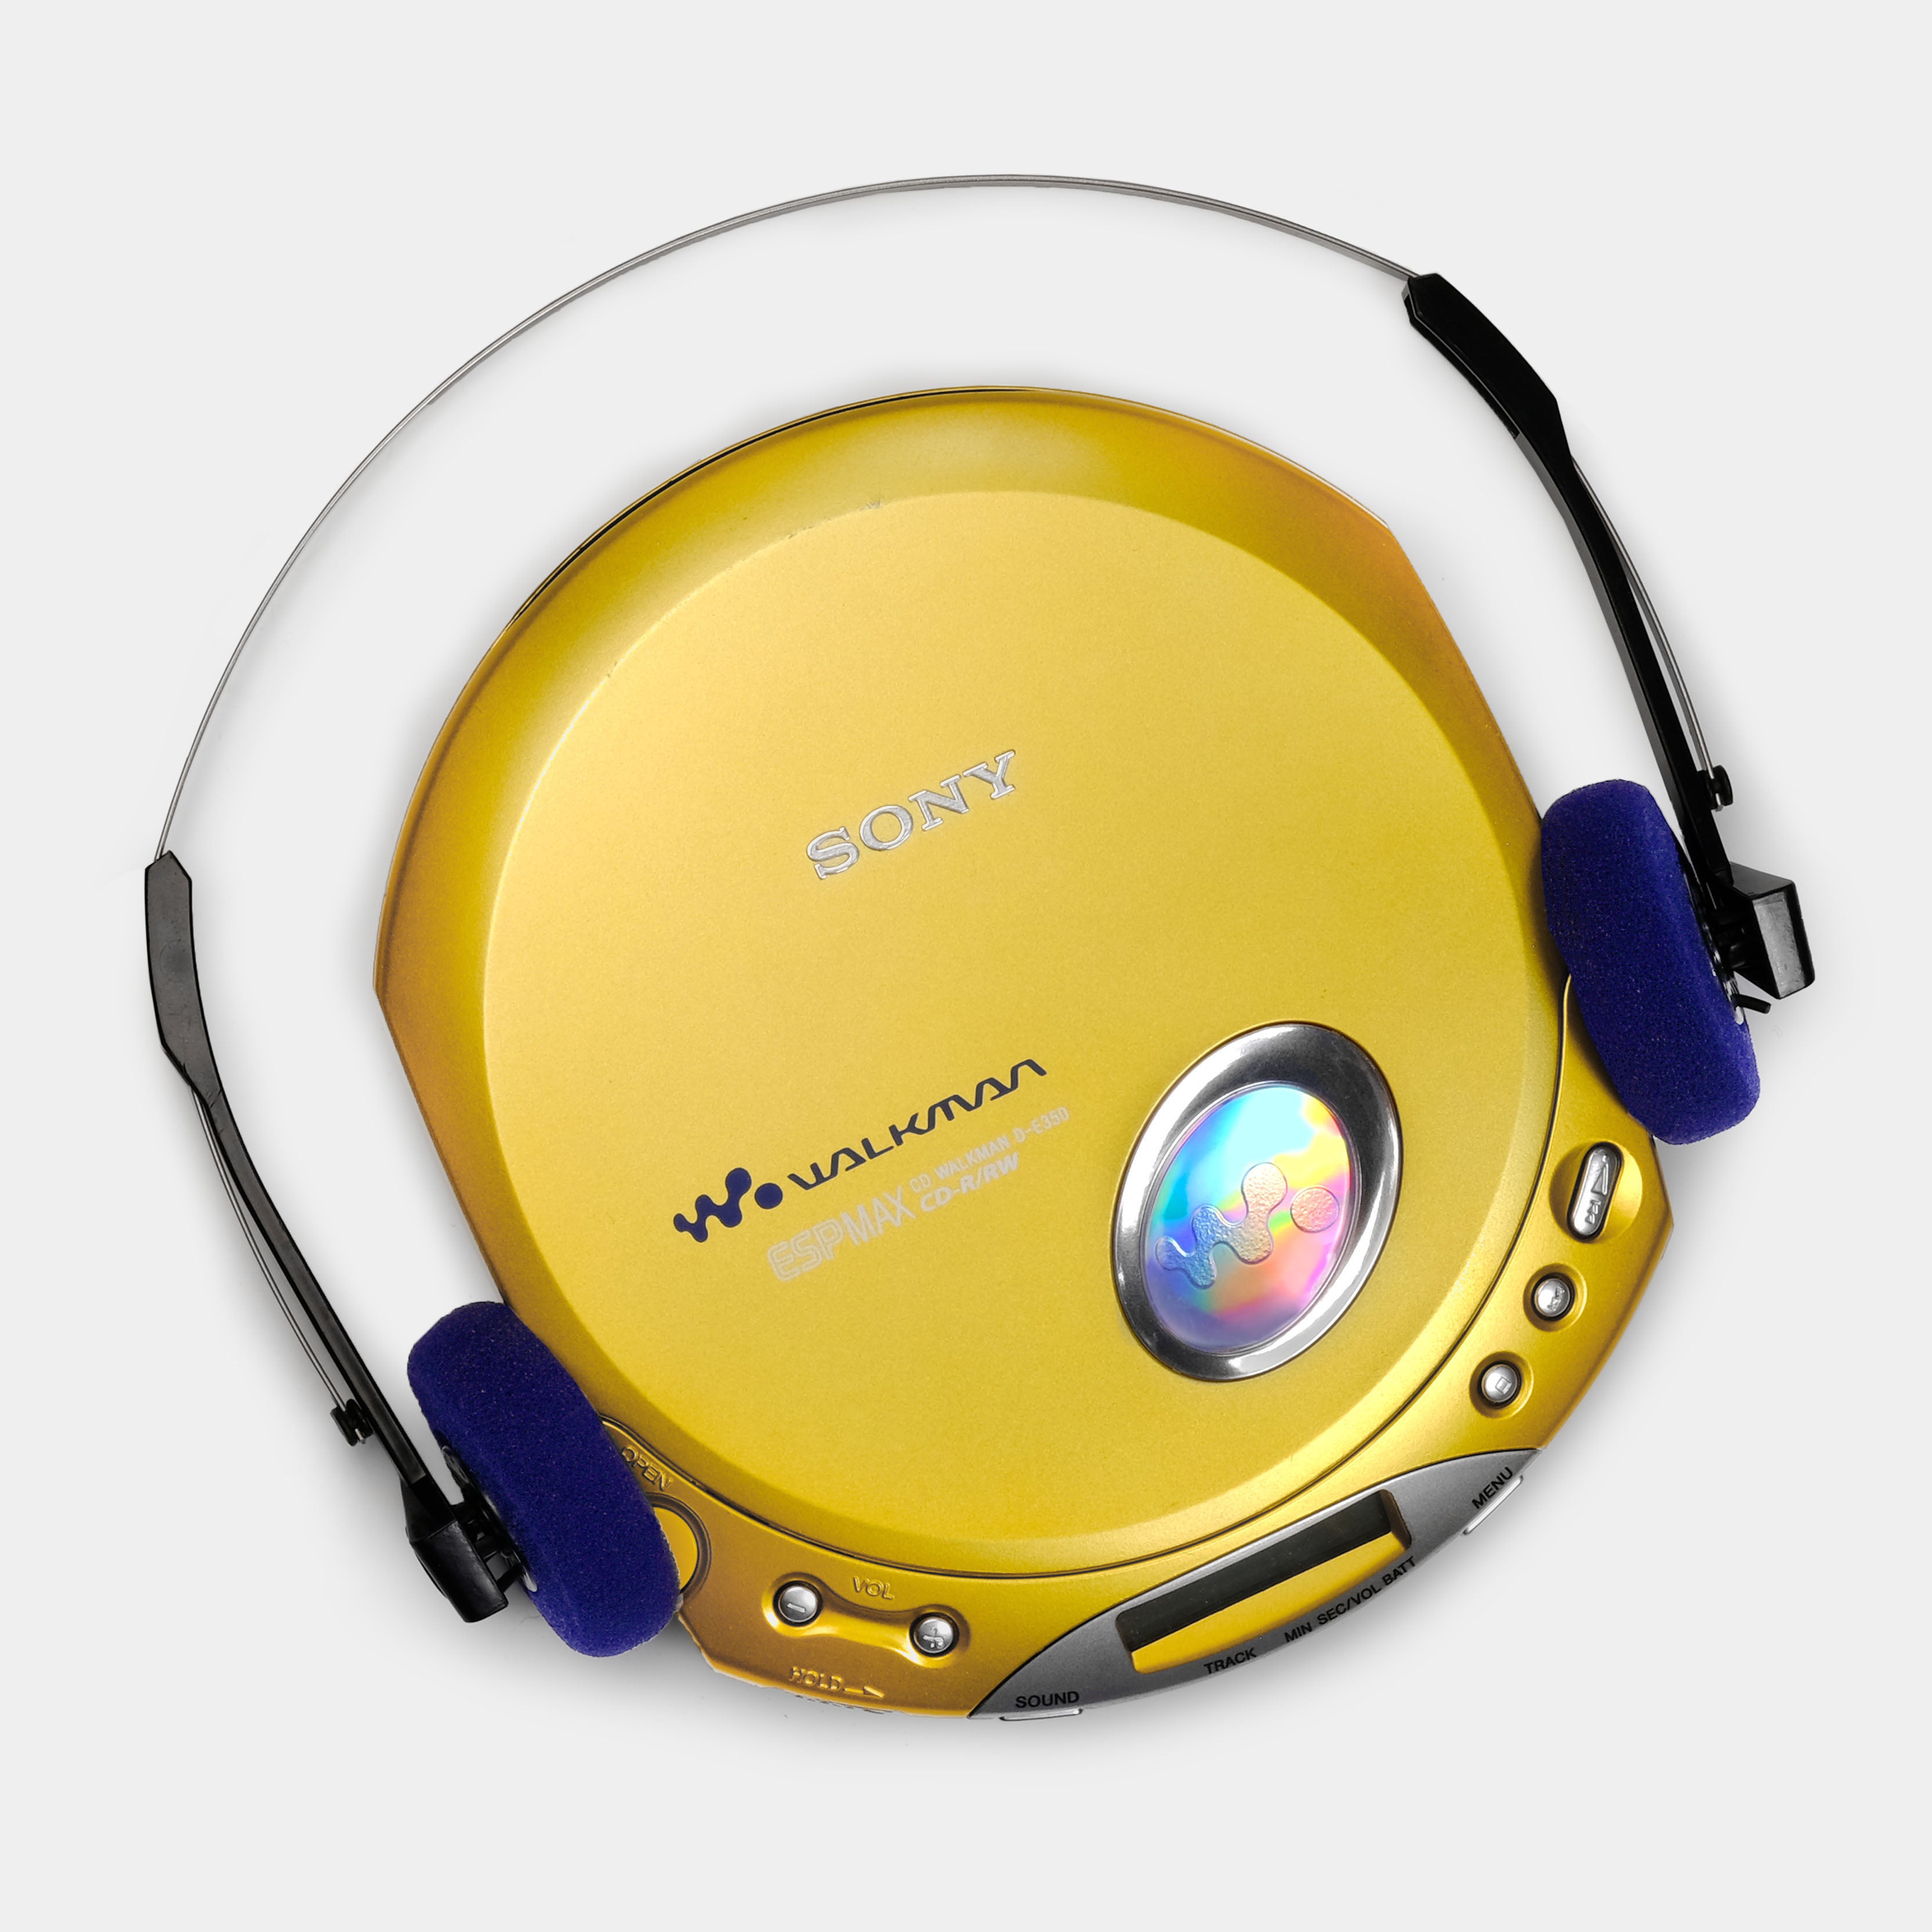 Sony Walkman D-E350 Gold Portable CD Player (B Grade)